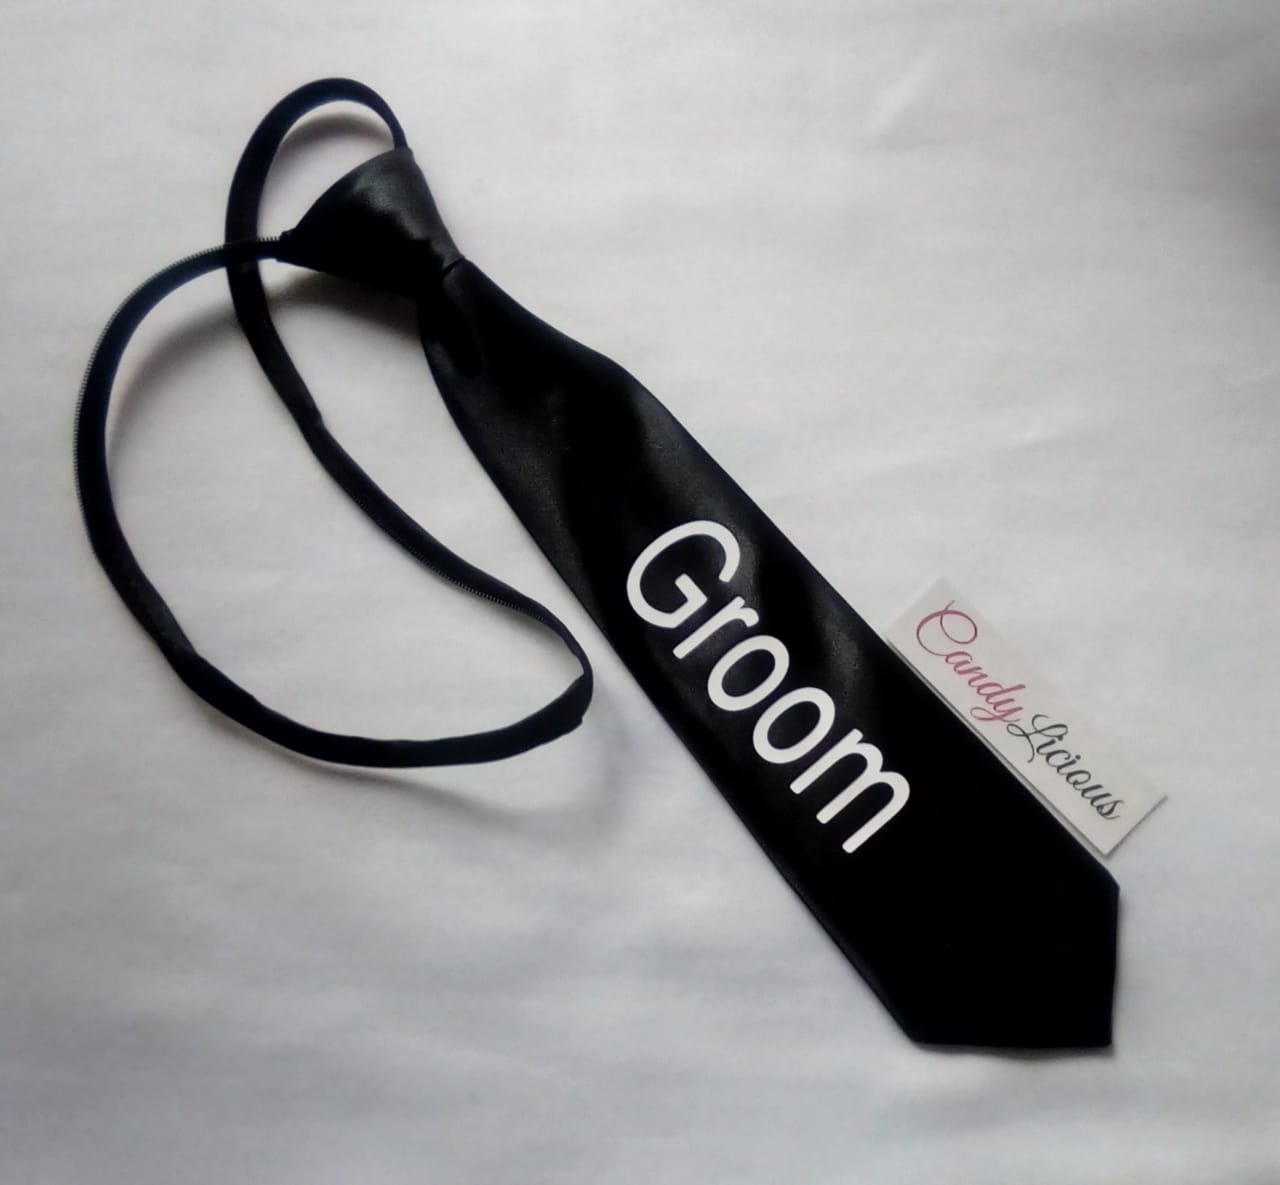 groom-tie--black-with-white-branding